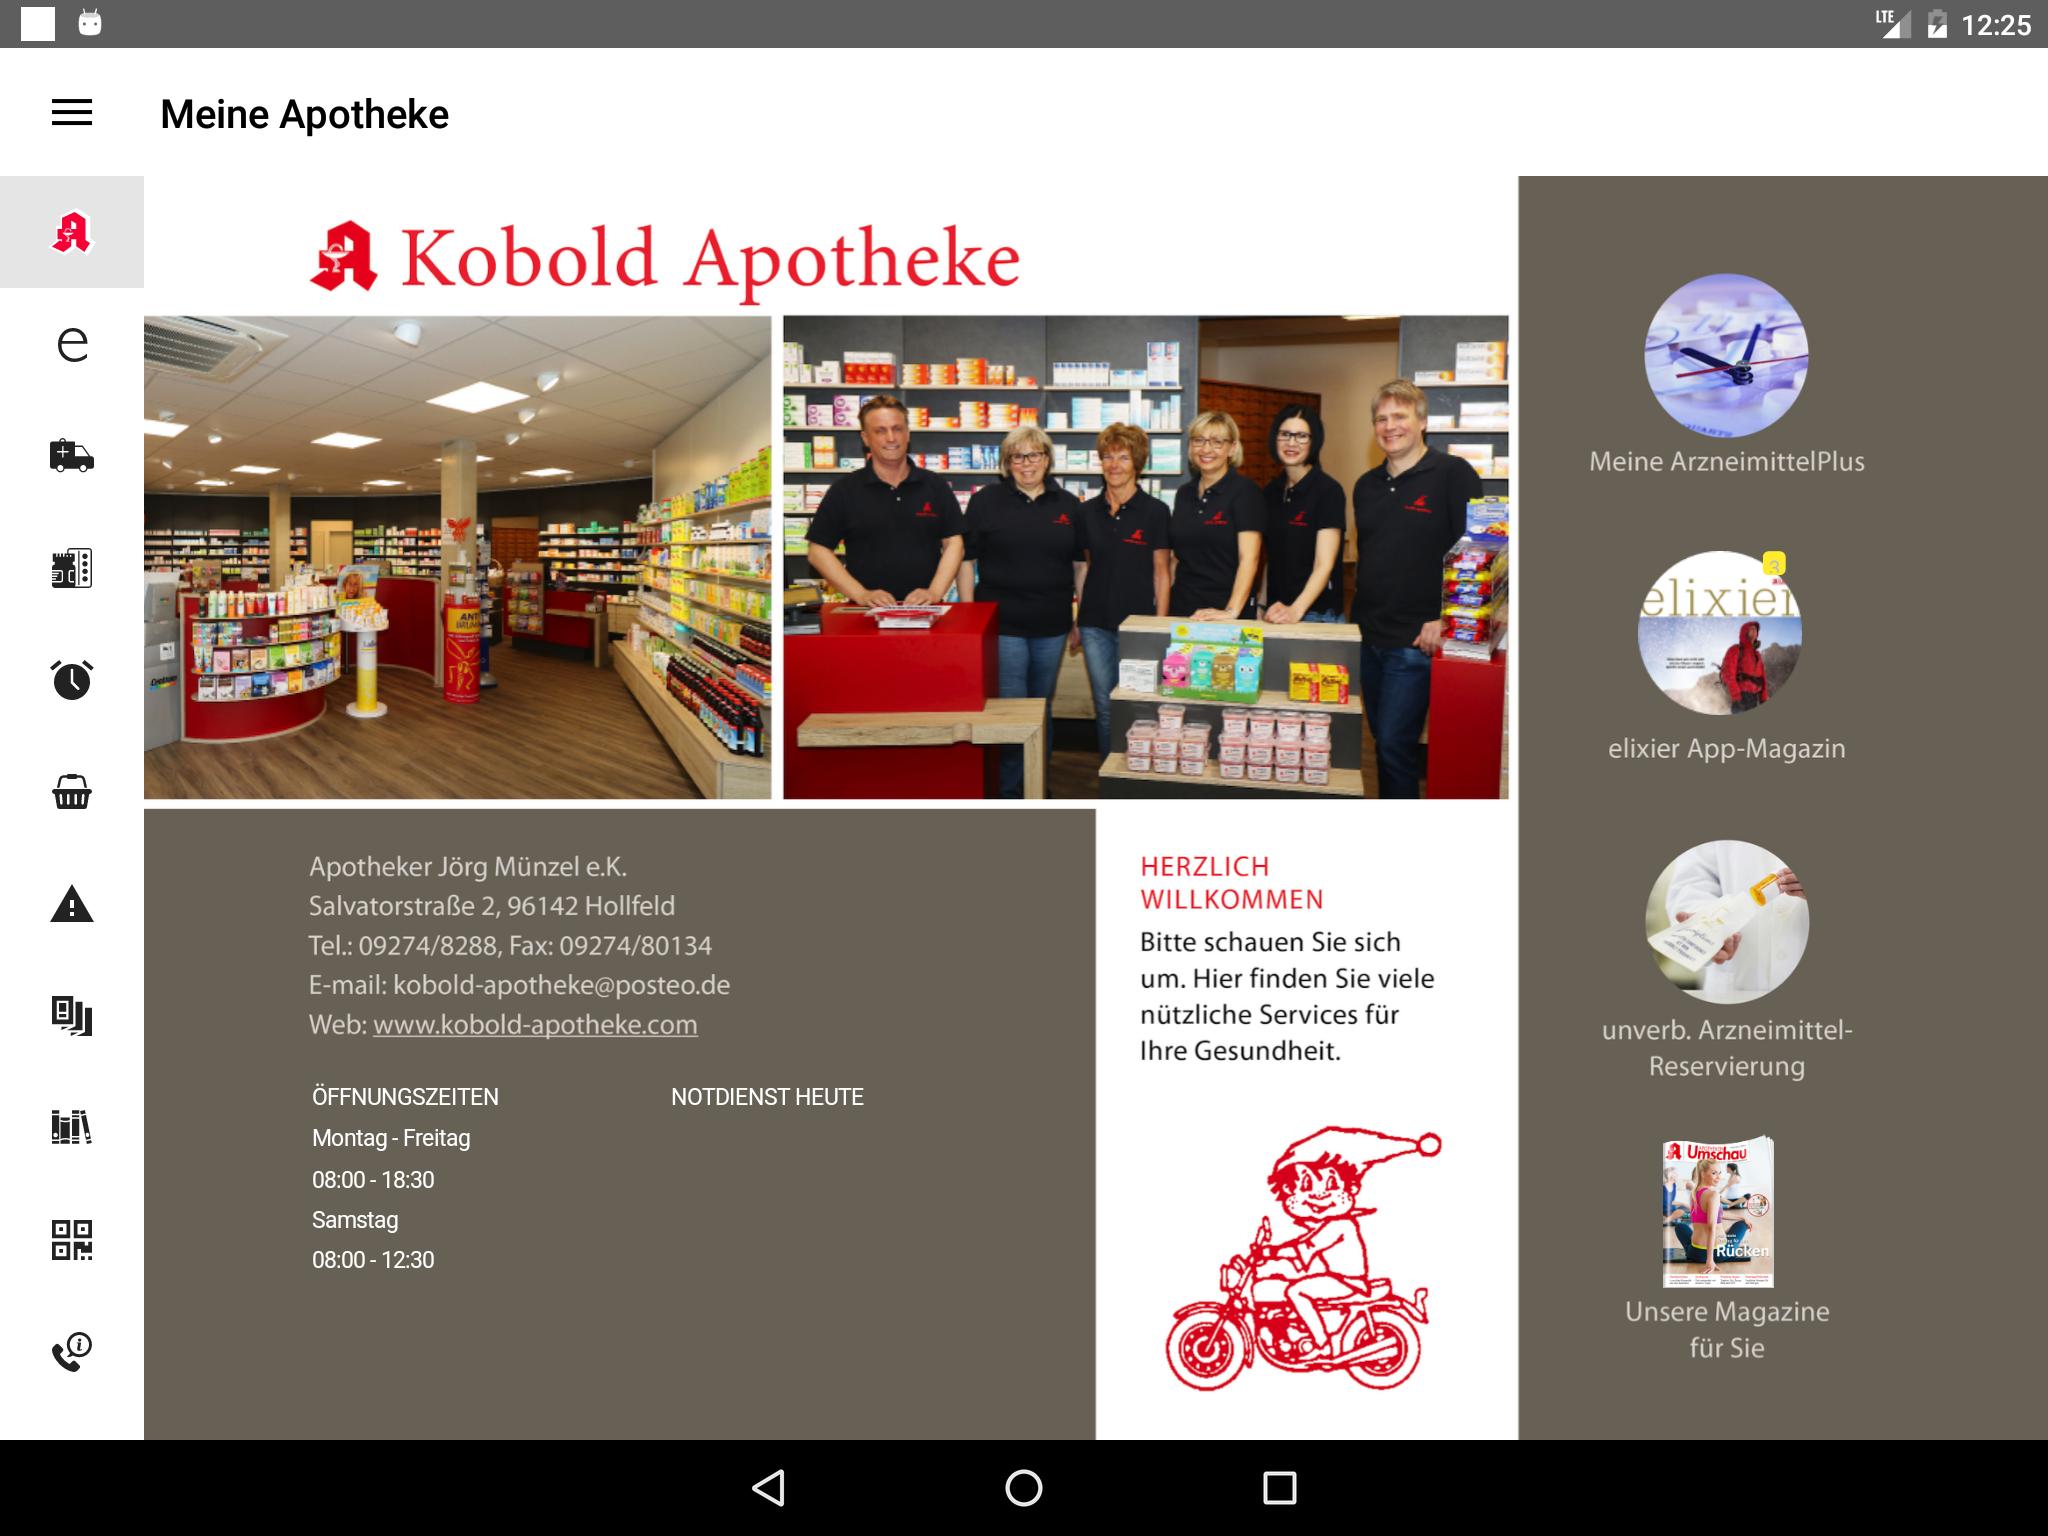 Kobold Apotheke for Android - APK Download